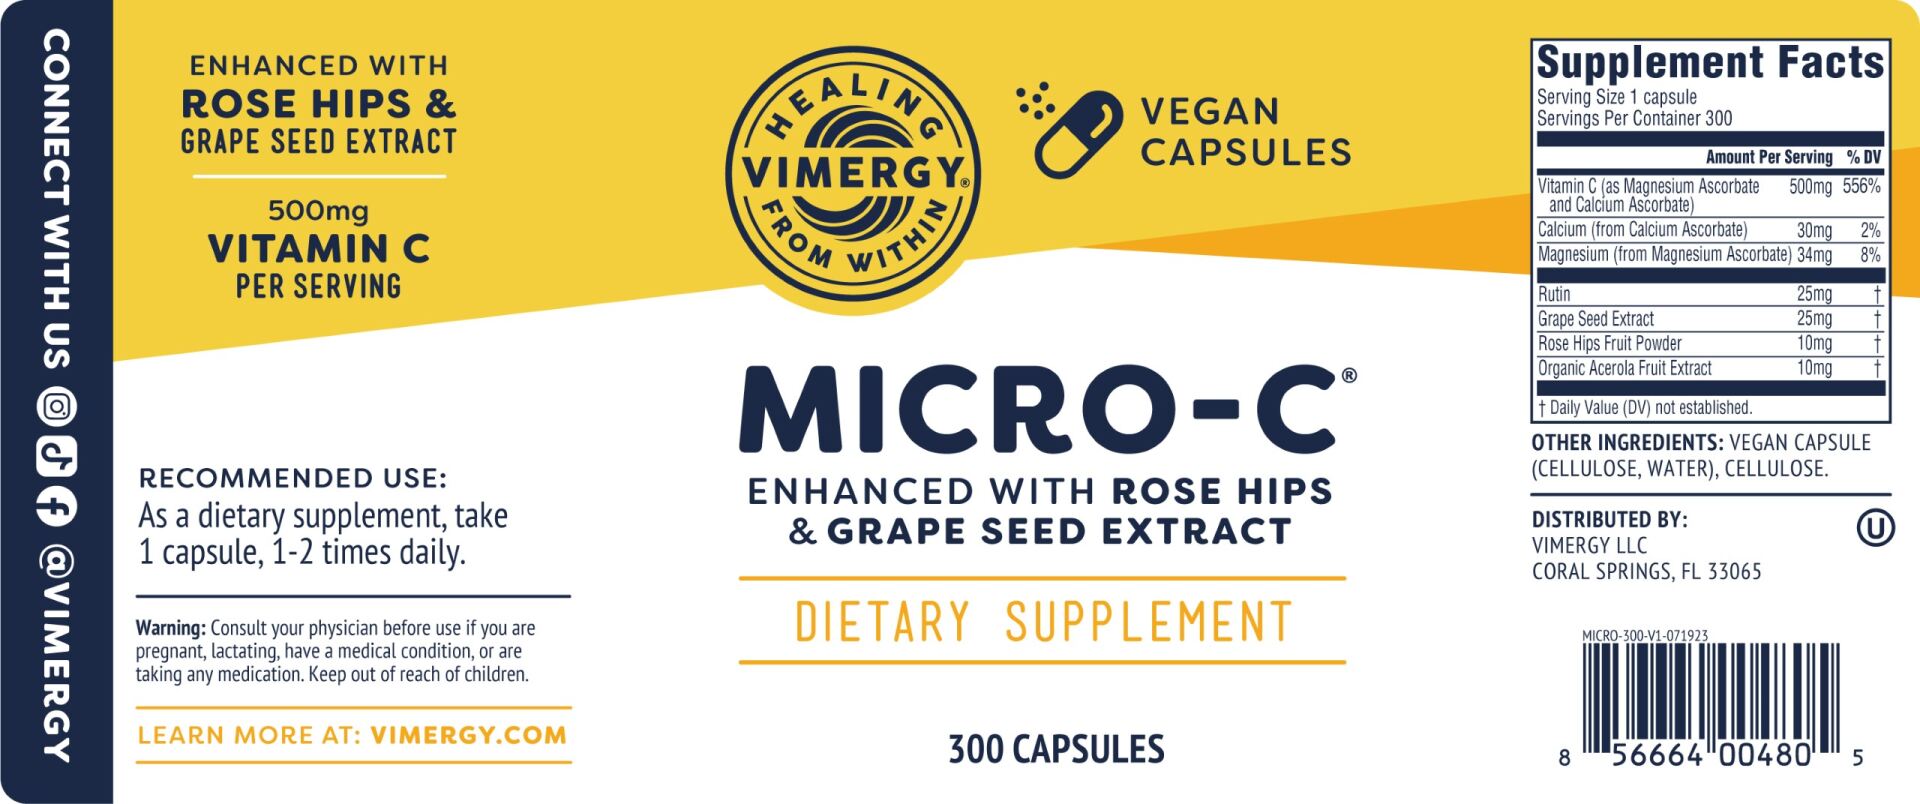 Vimergy Micro-C 300 Capsules